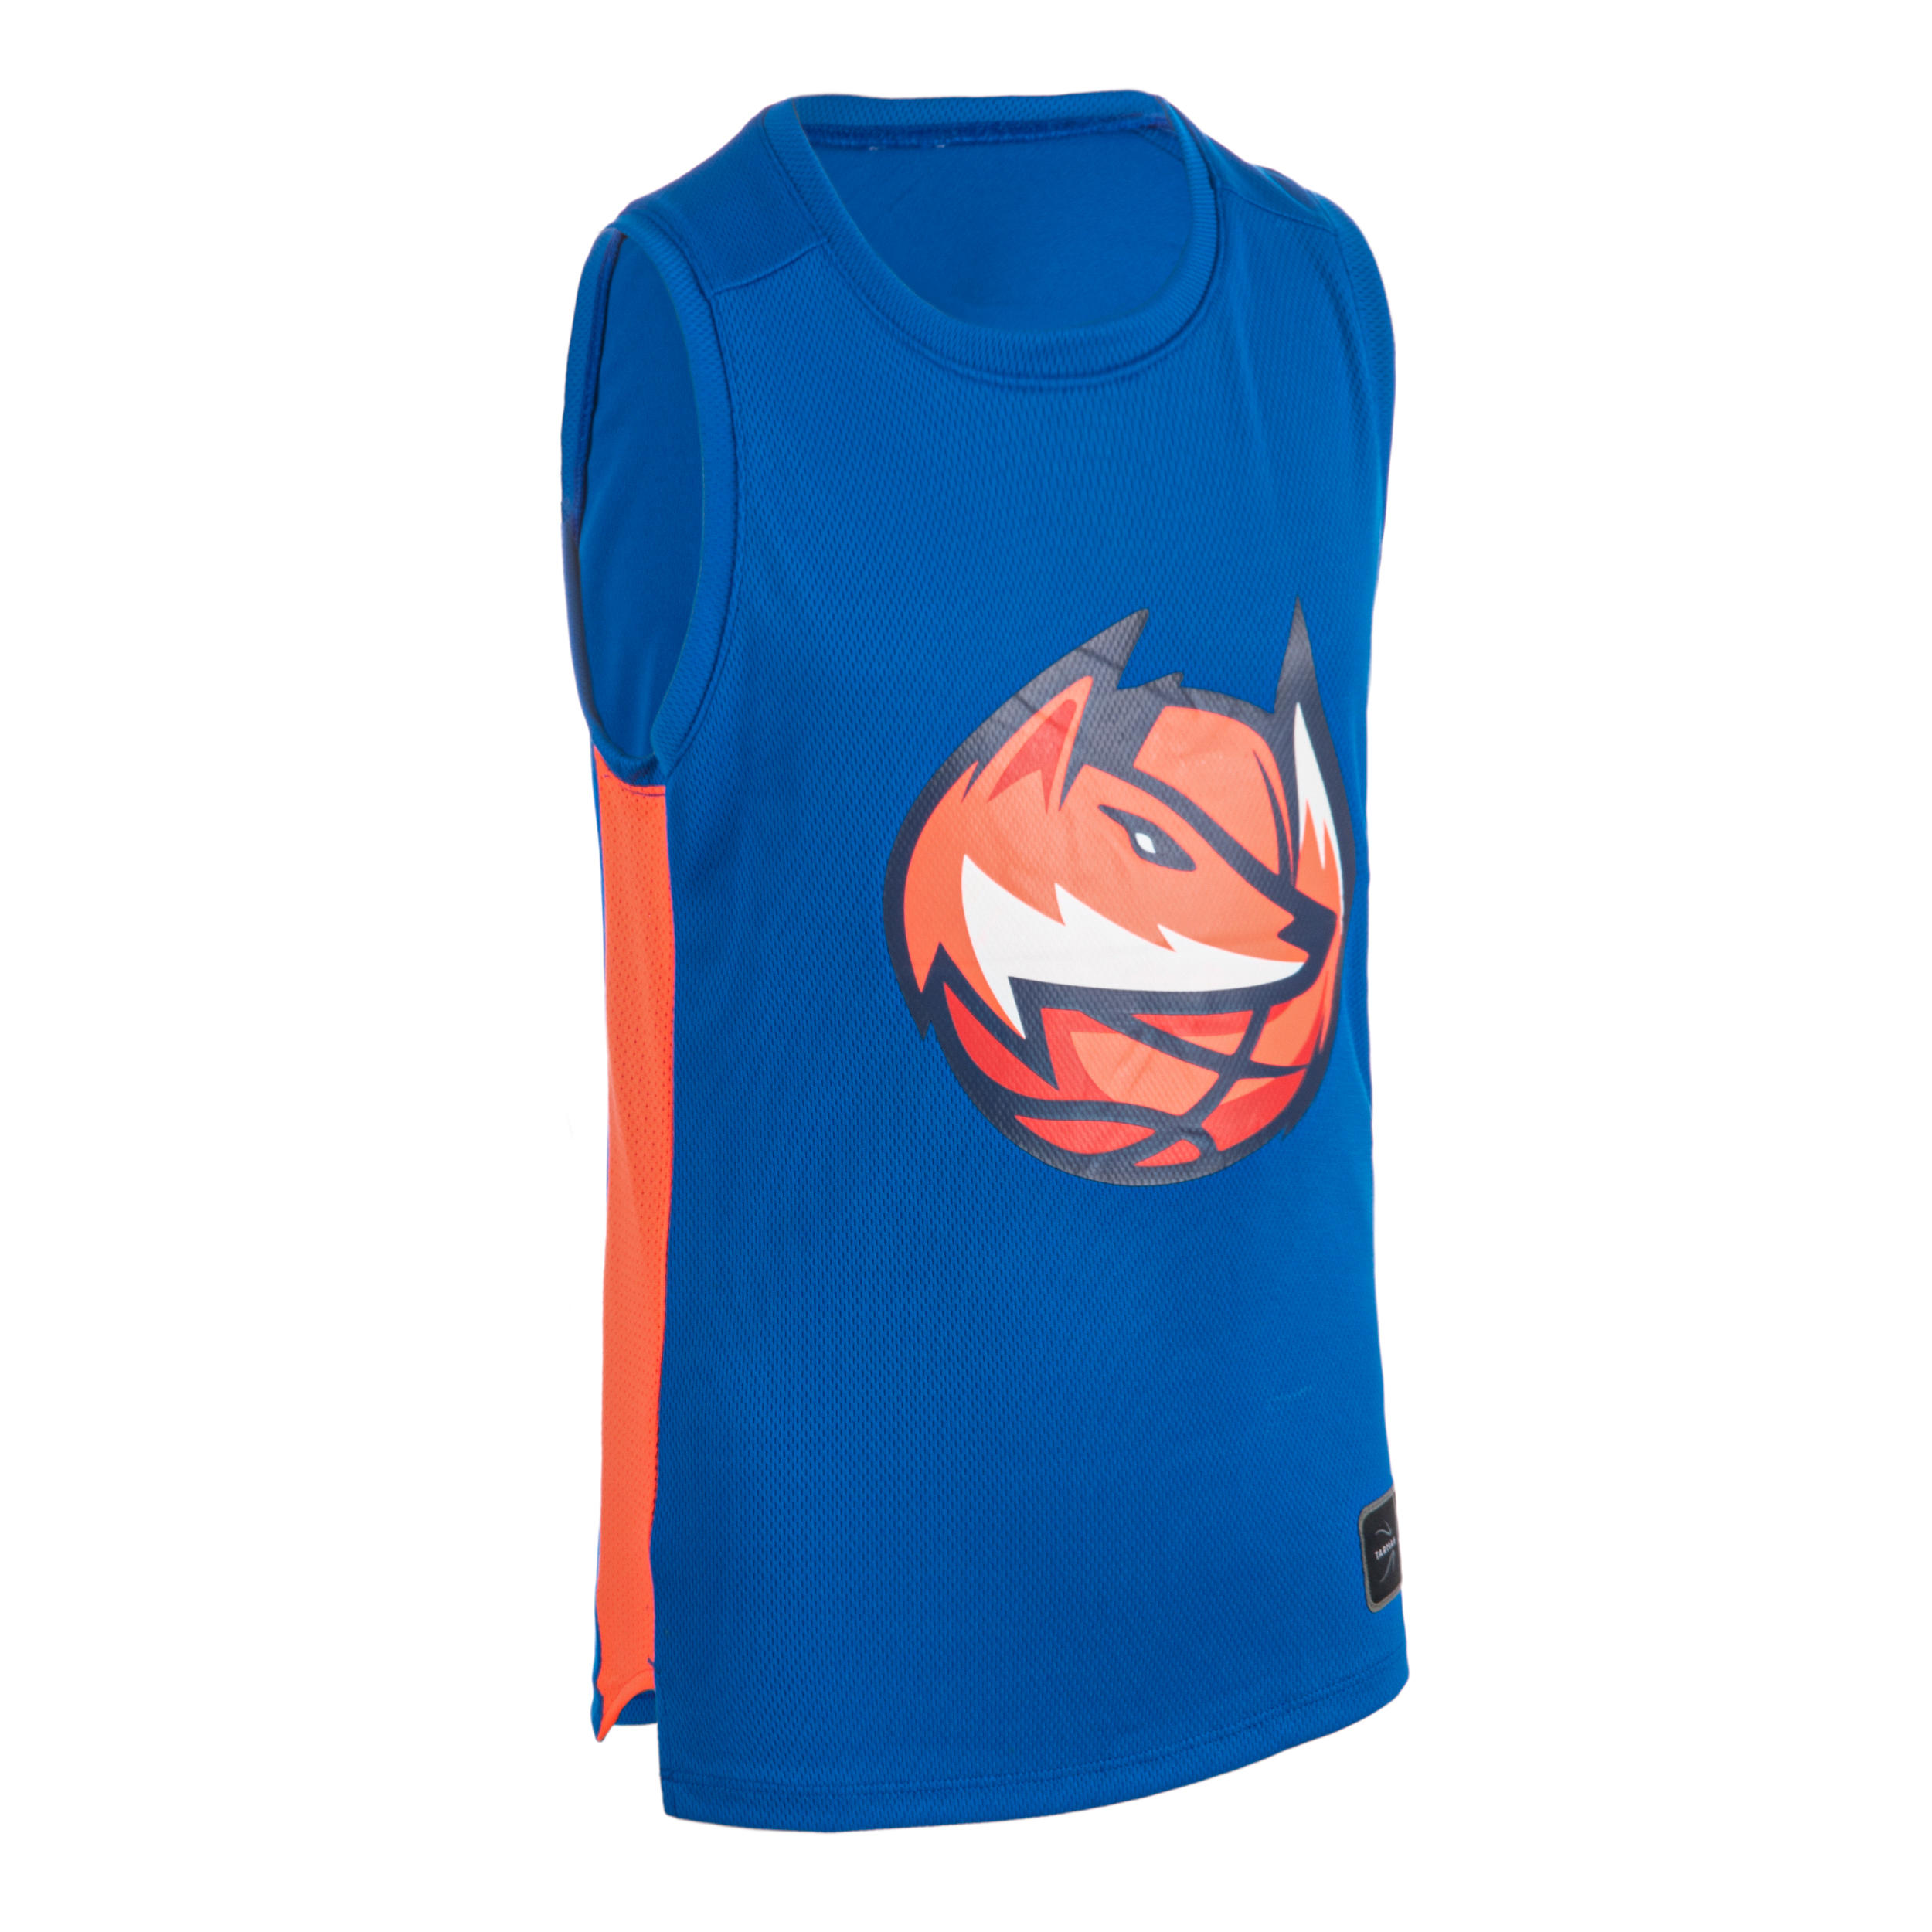 orange and blue basketball jersey